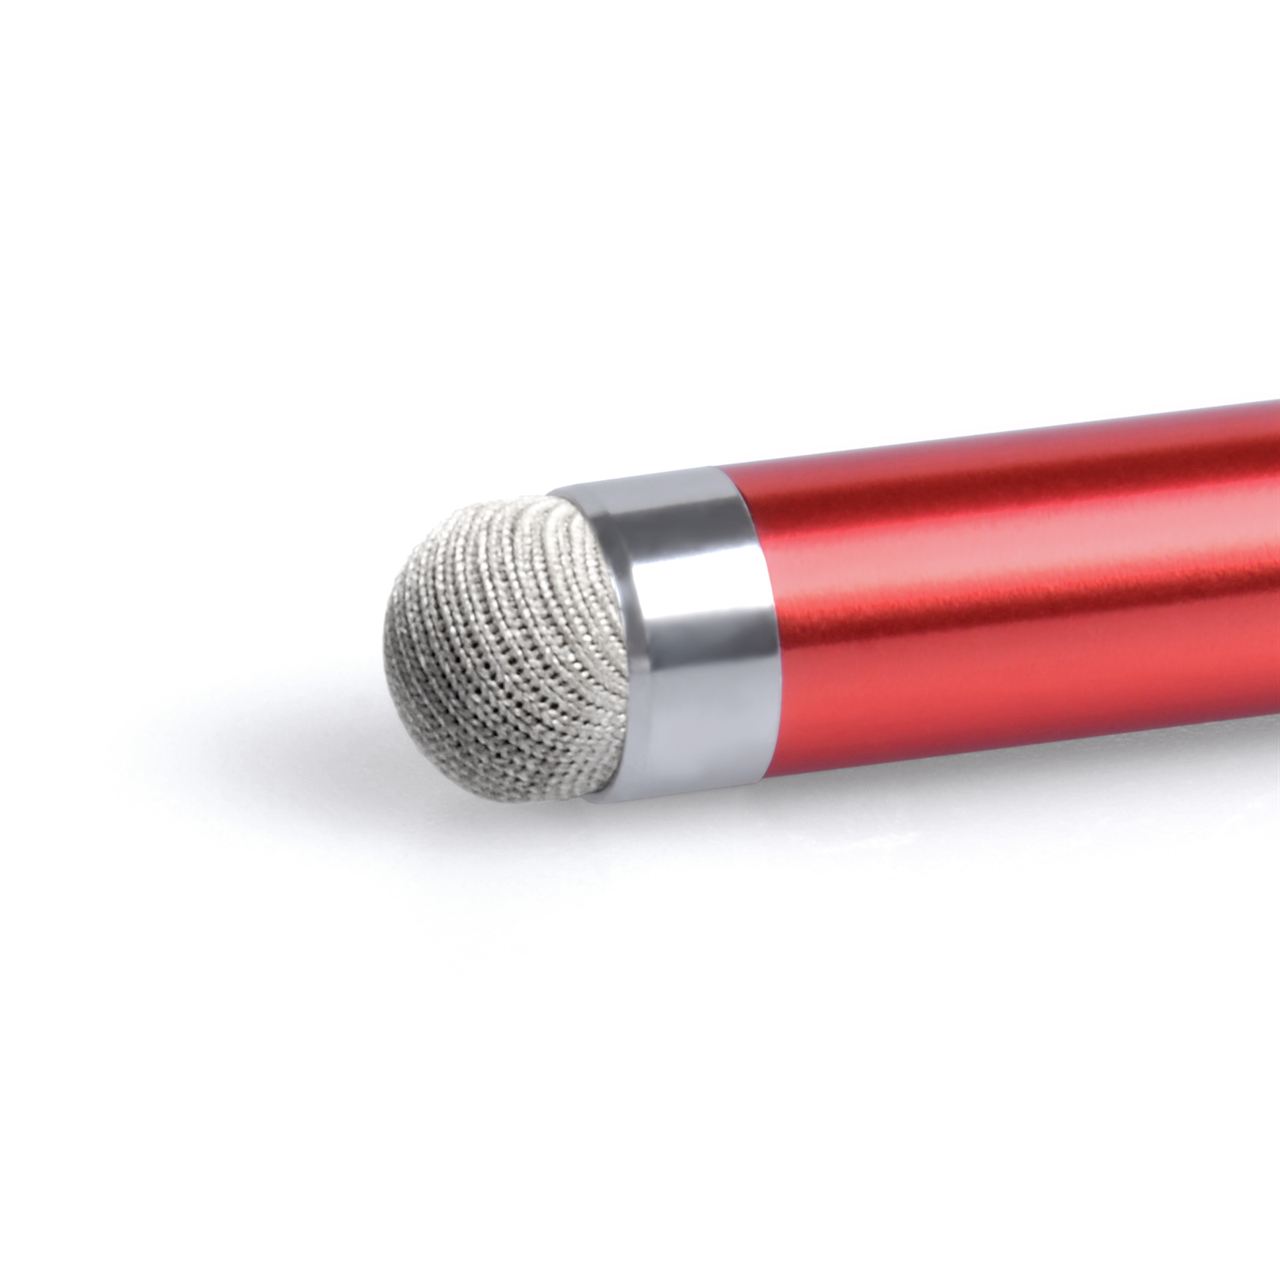 Caseflex Stylus Pen - Red